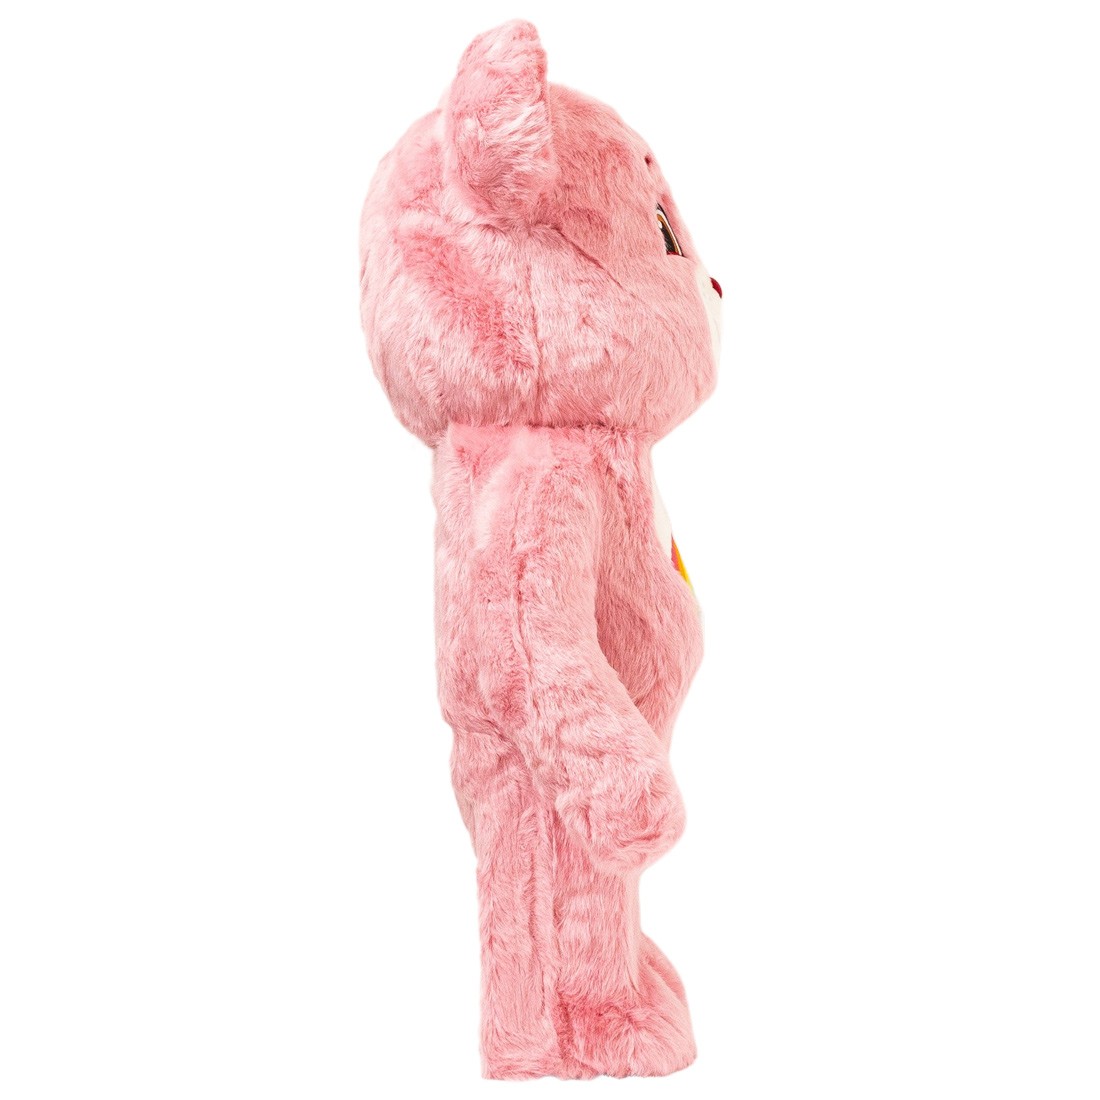 Medicom Care Bears Cheer Bear Costume Ver. 1000% Bearbrick Figure (pink)